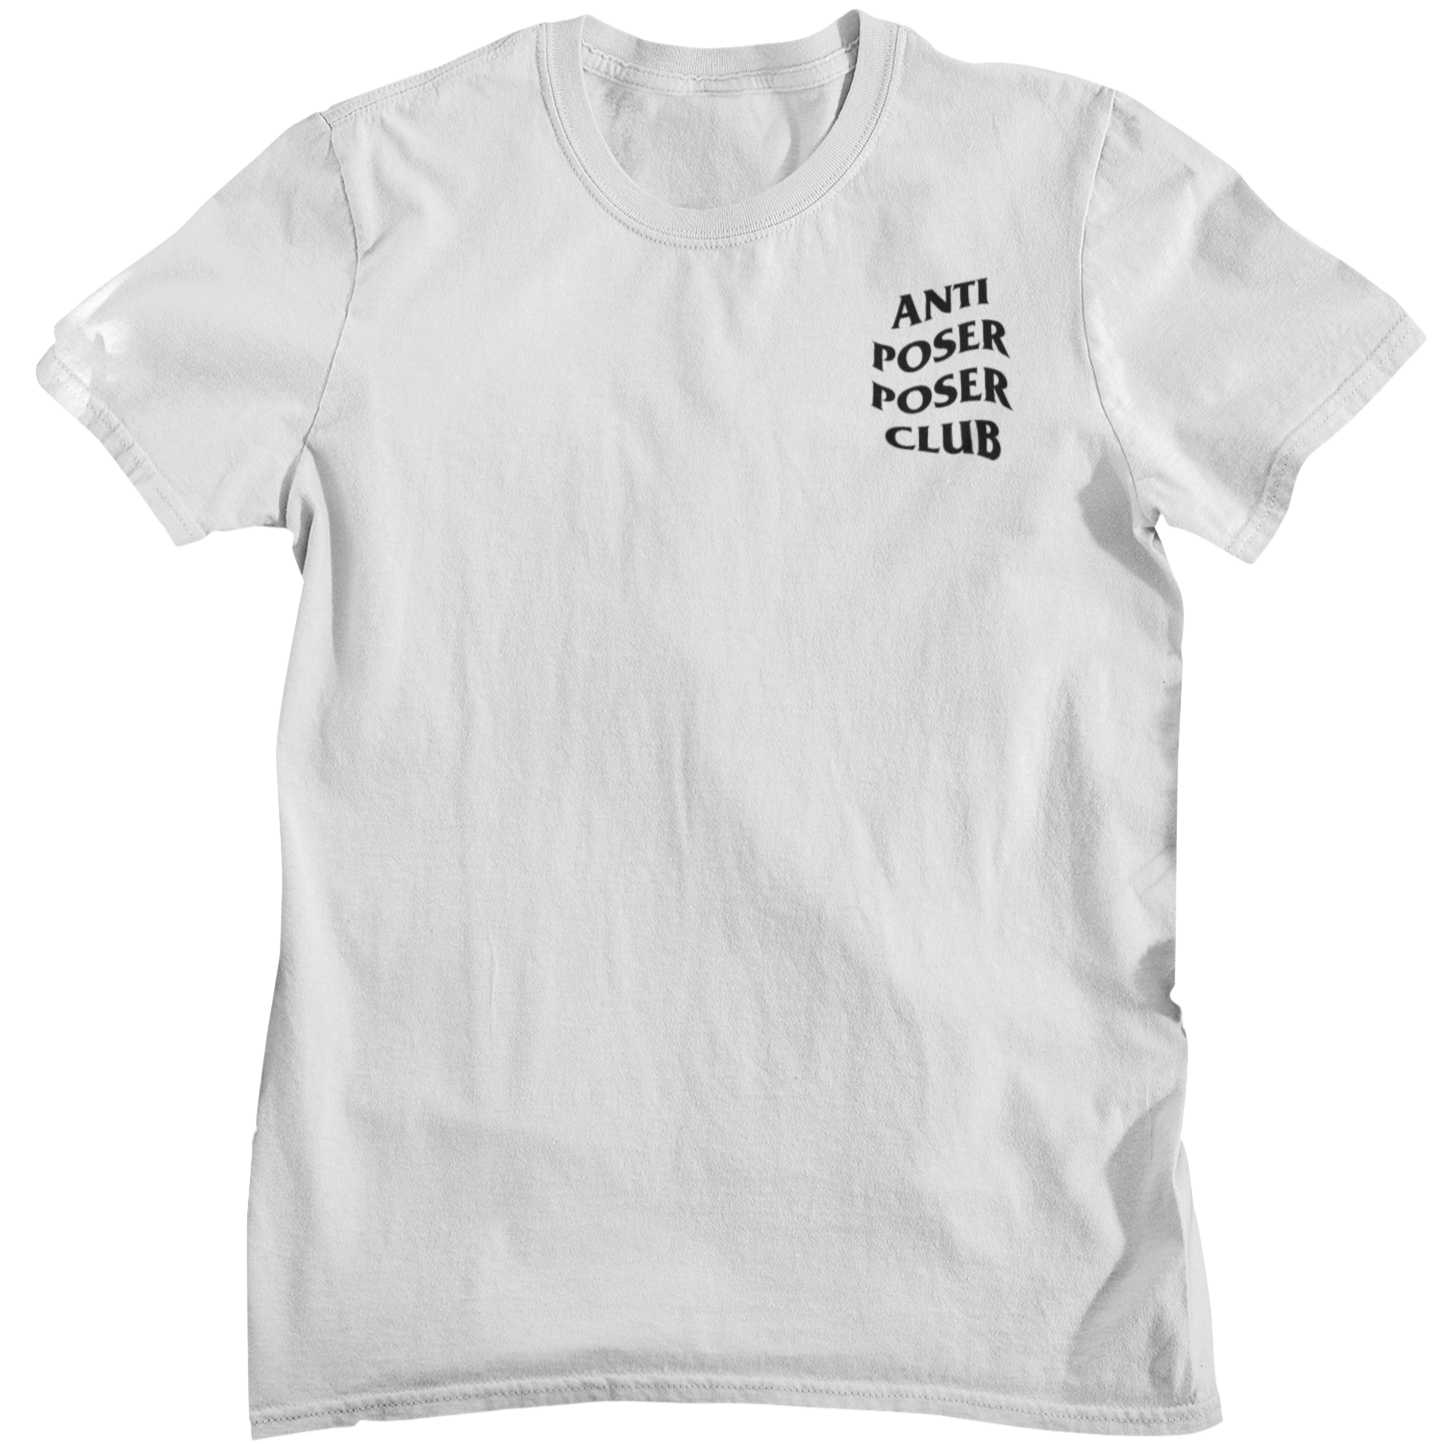 ANTI POSER POSER CLUB - Unisex Shirt